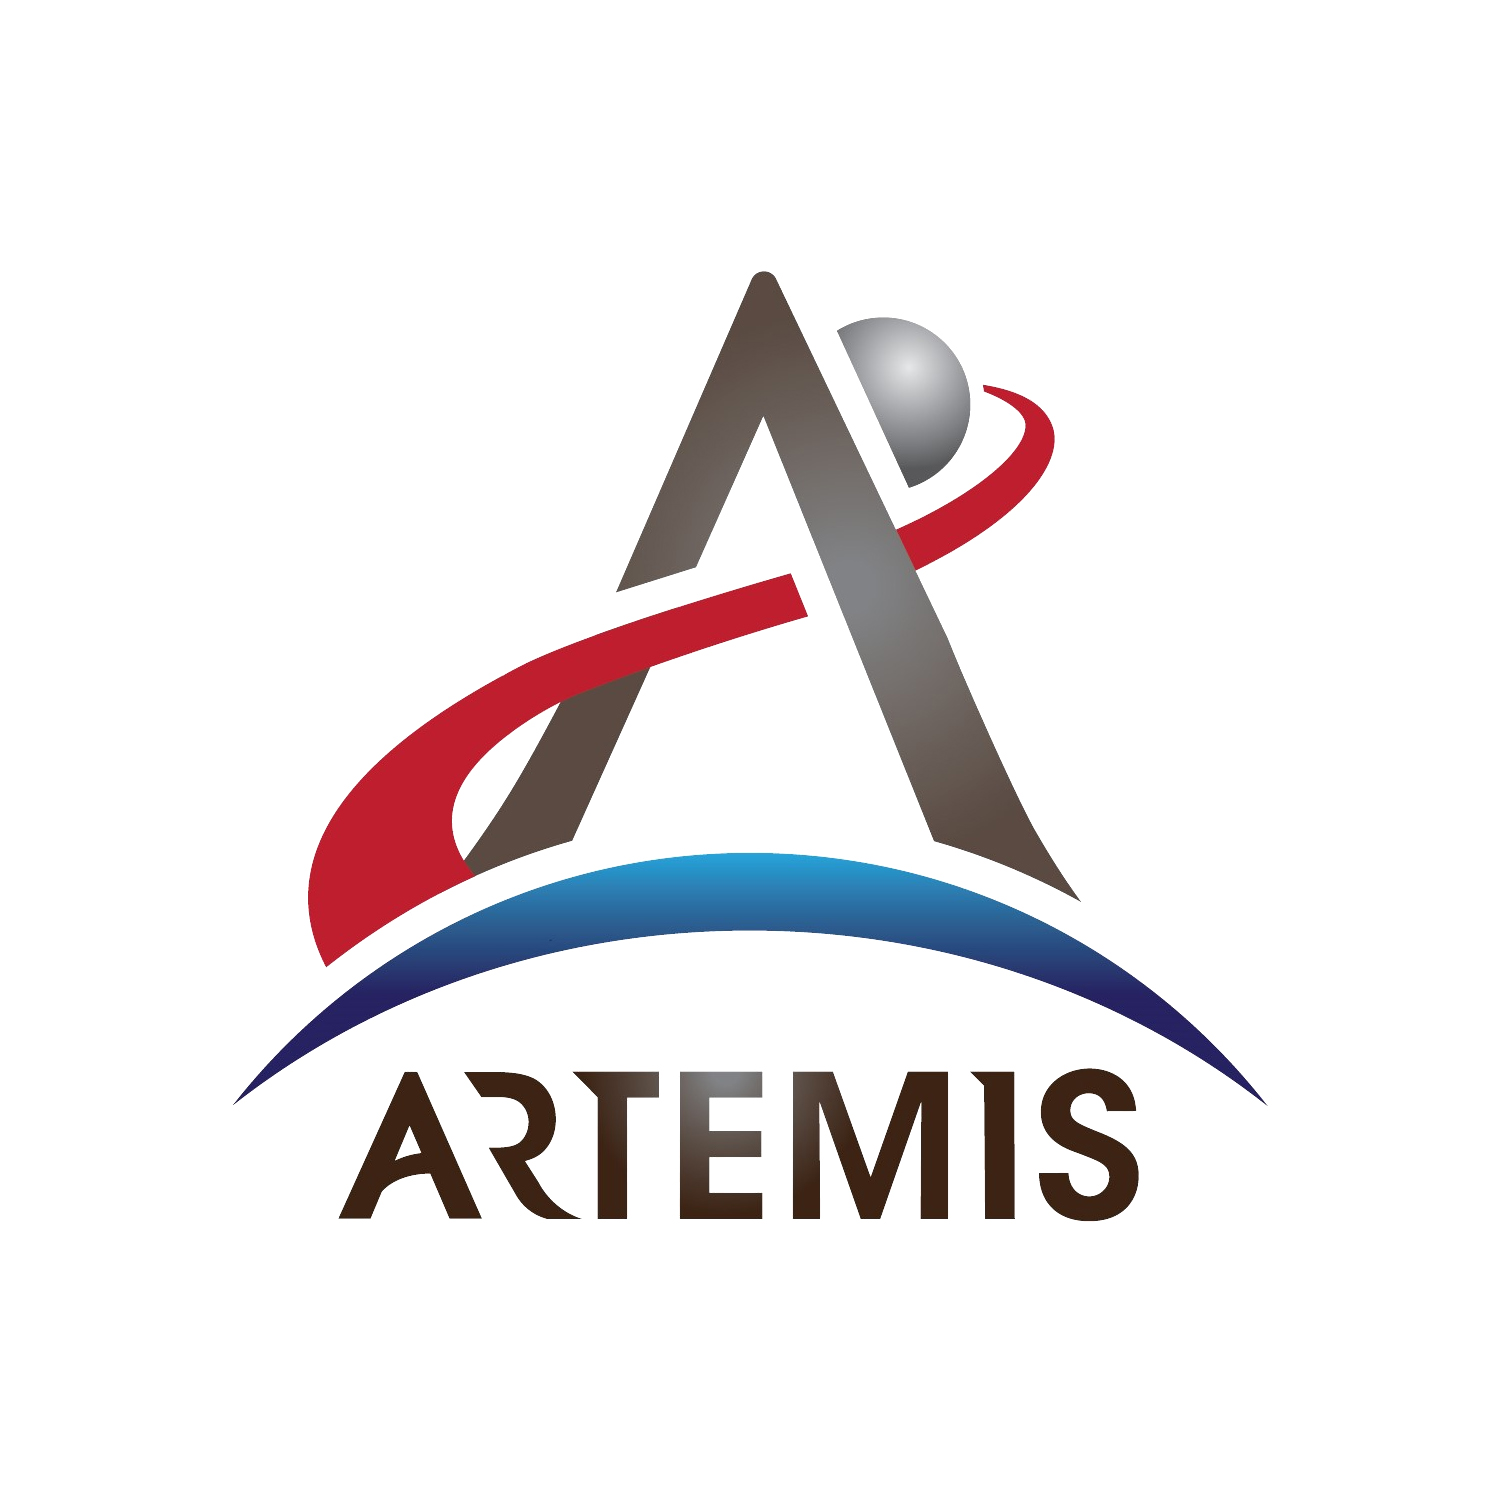 Artemis_Logo_NASA_1500p